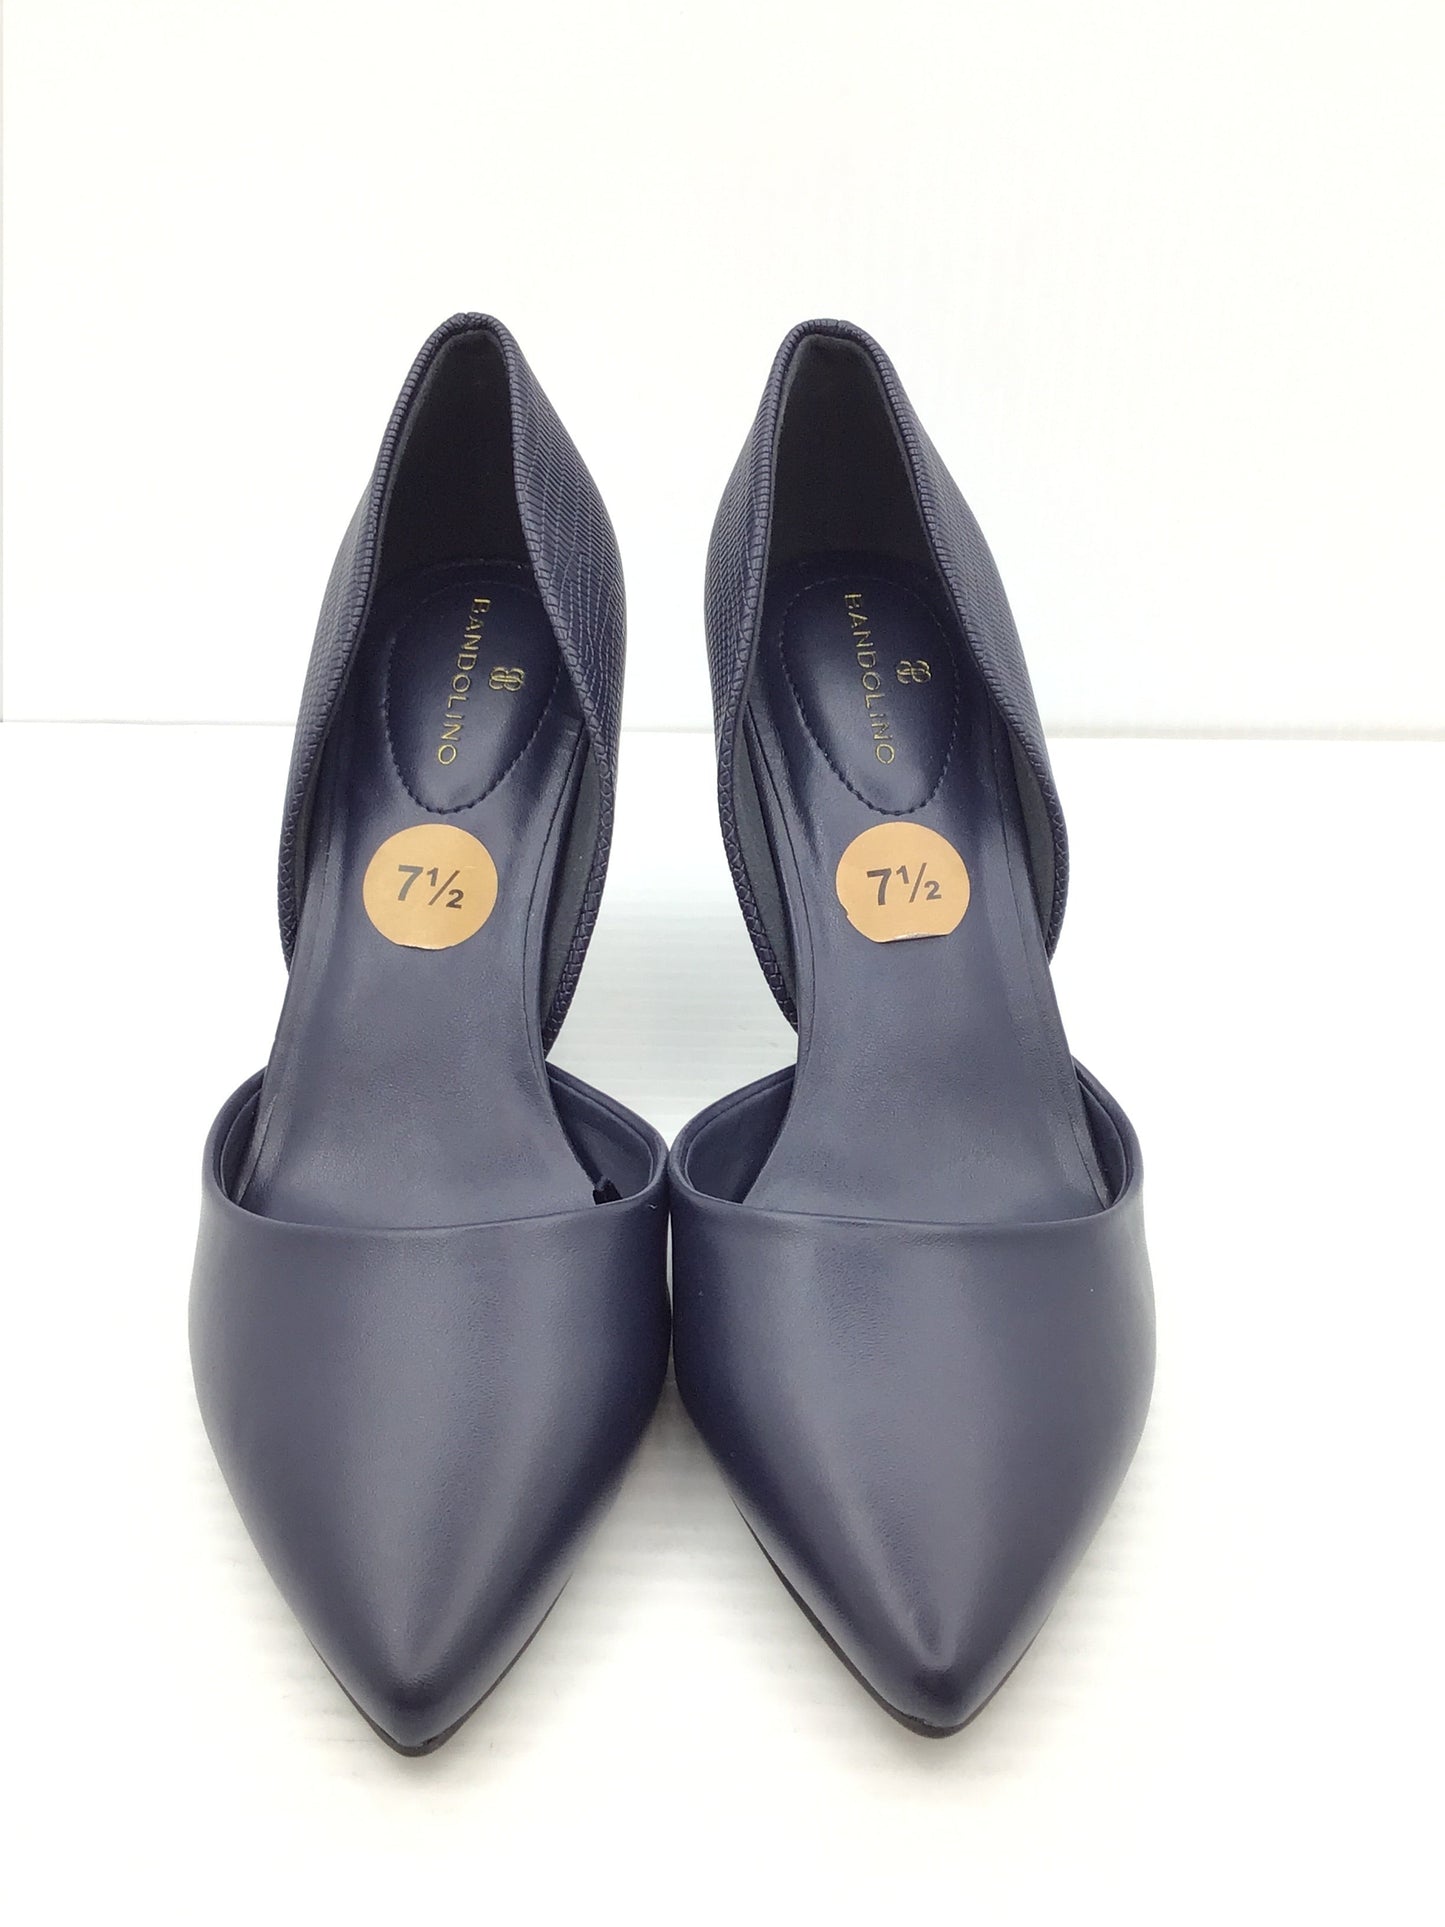 Shoes Heels Stiletto By Bandolino  Size: 7.5